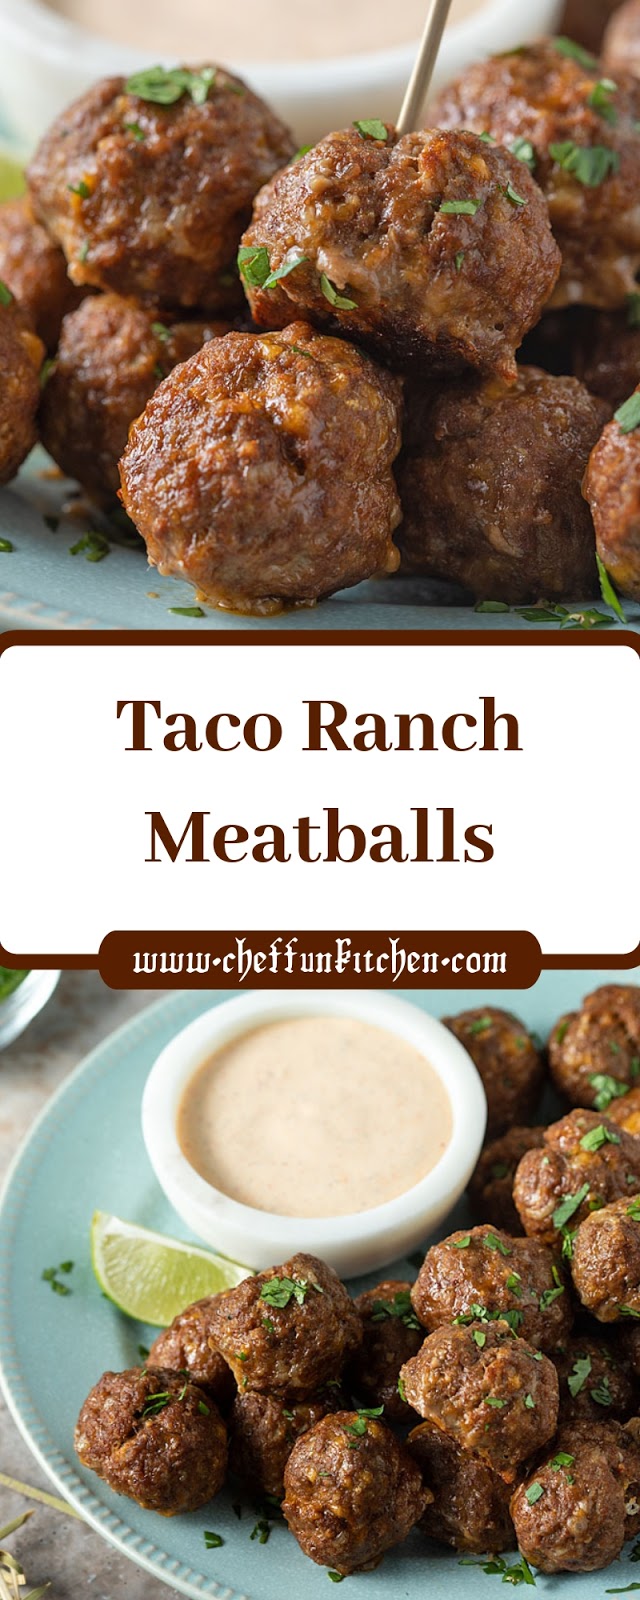 Taco Ranch Meatballs